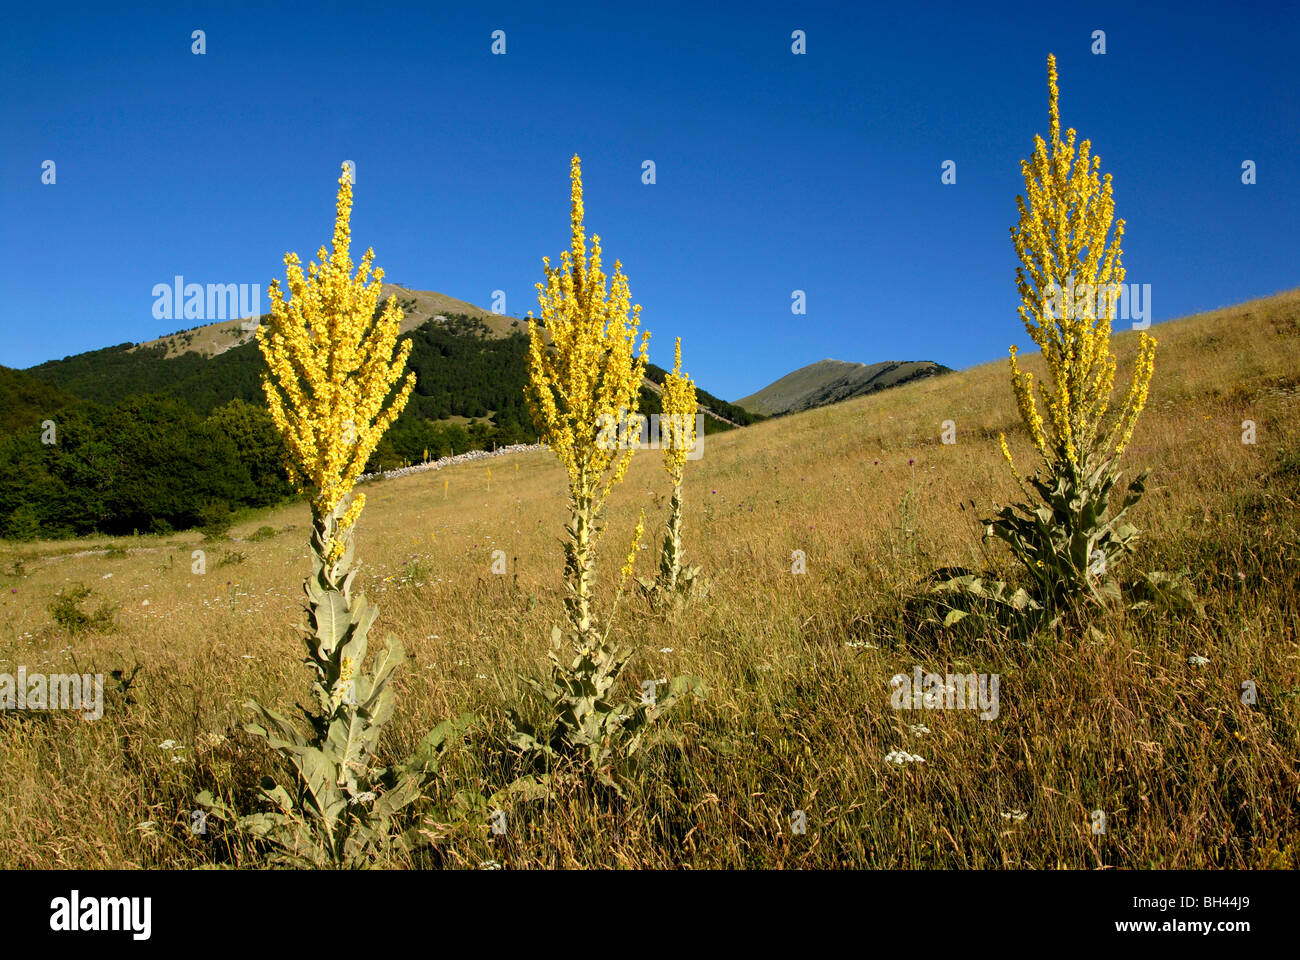 Hoary mullein plants (Verbascum pulverulentum) growing in dry grassland in mountainous region. Stock Photo